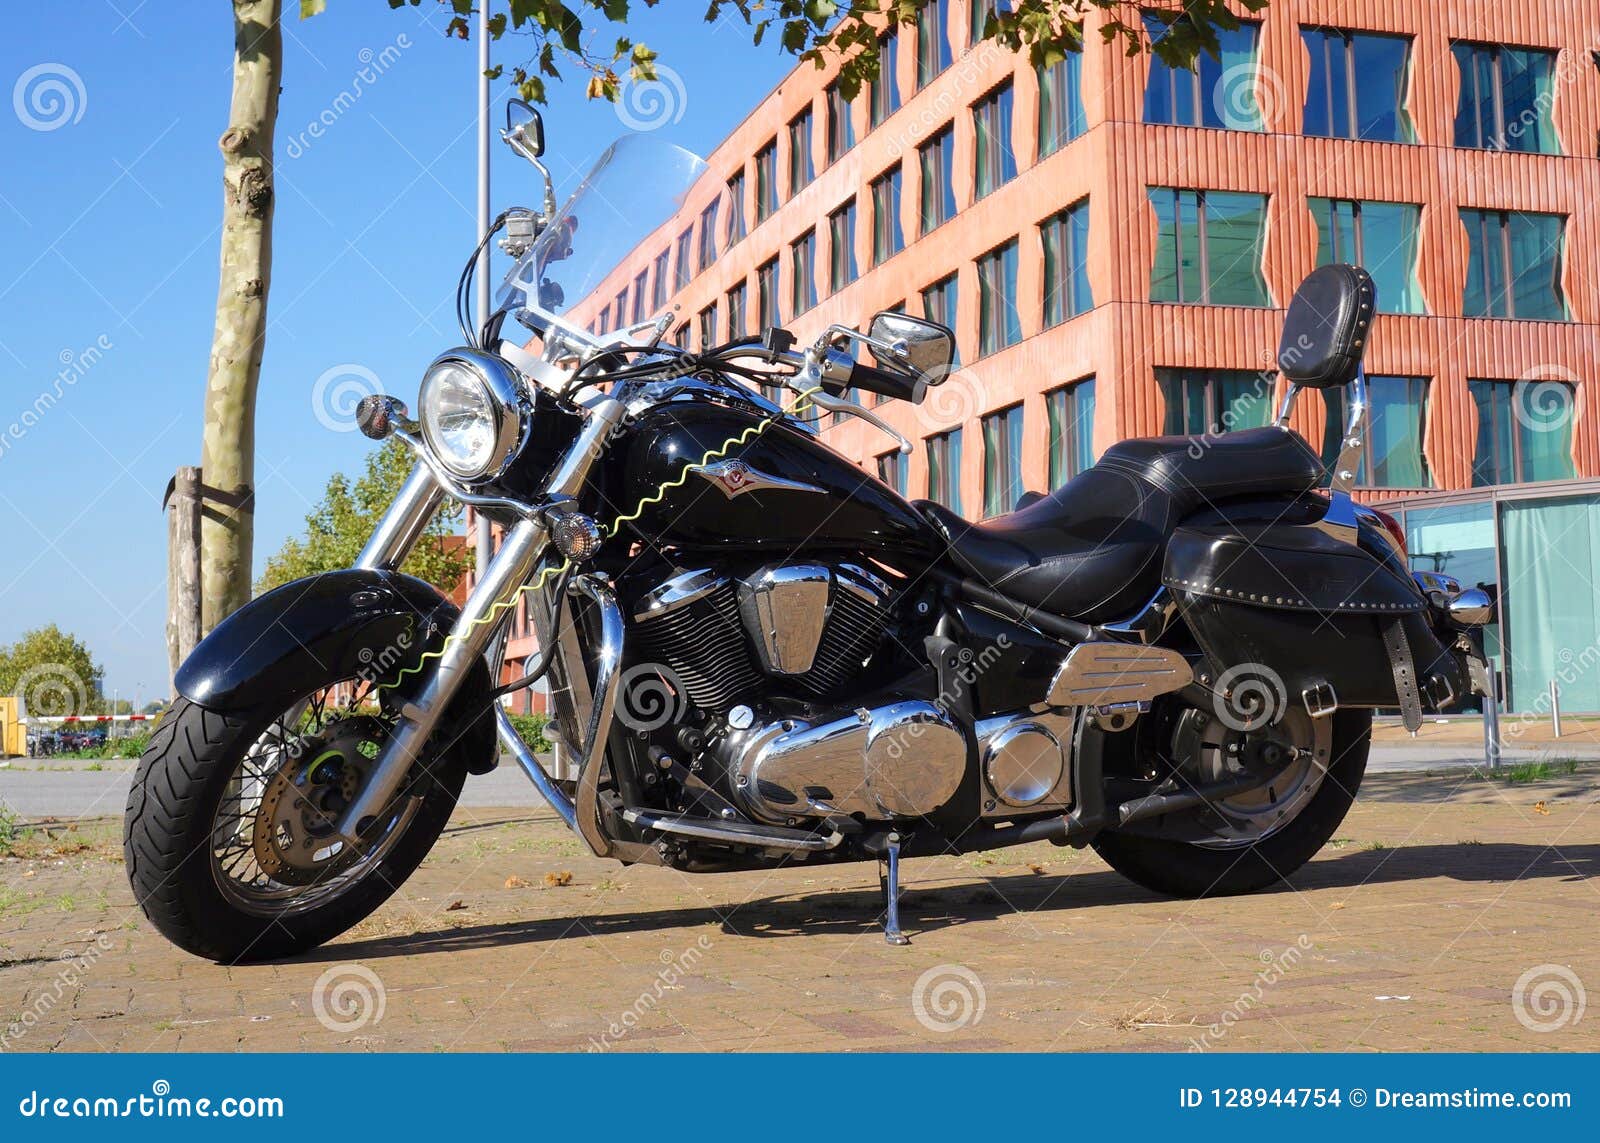 Kawasaki Vulcan Motorcycle Model VN900B Editorial Stock Image - Image of engine, beautiful: 128944754